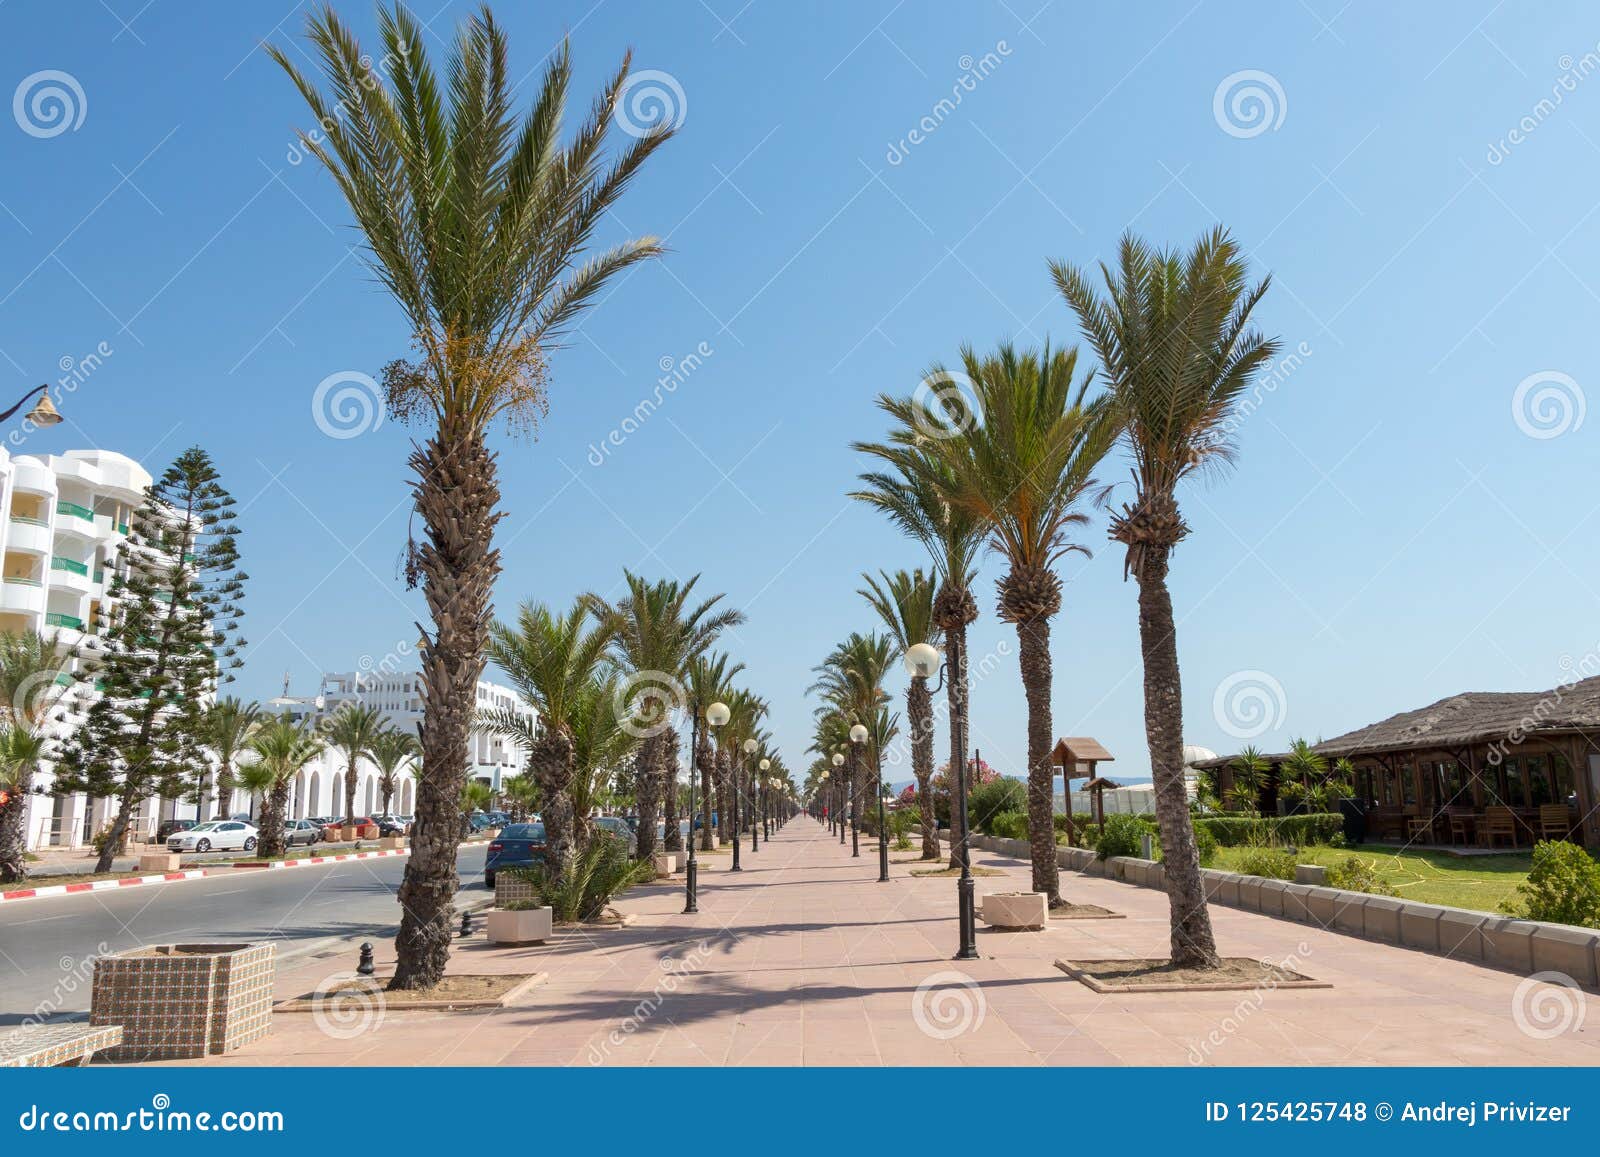 palm-tree lined promenade with lampposts yasmine hammamet, tunisia